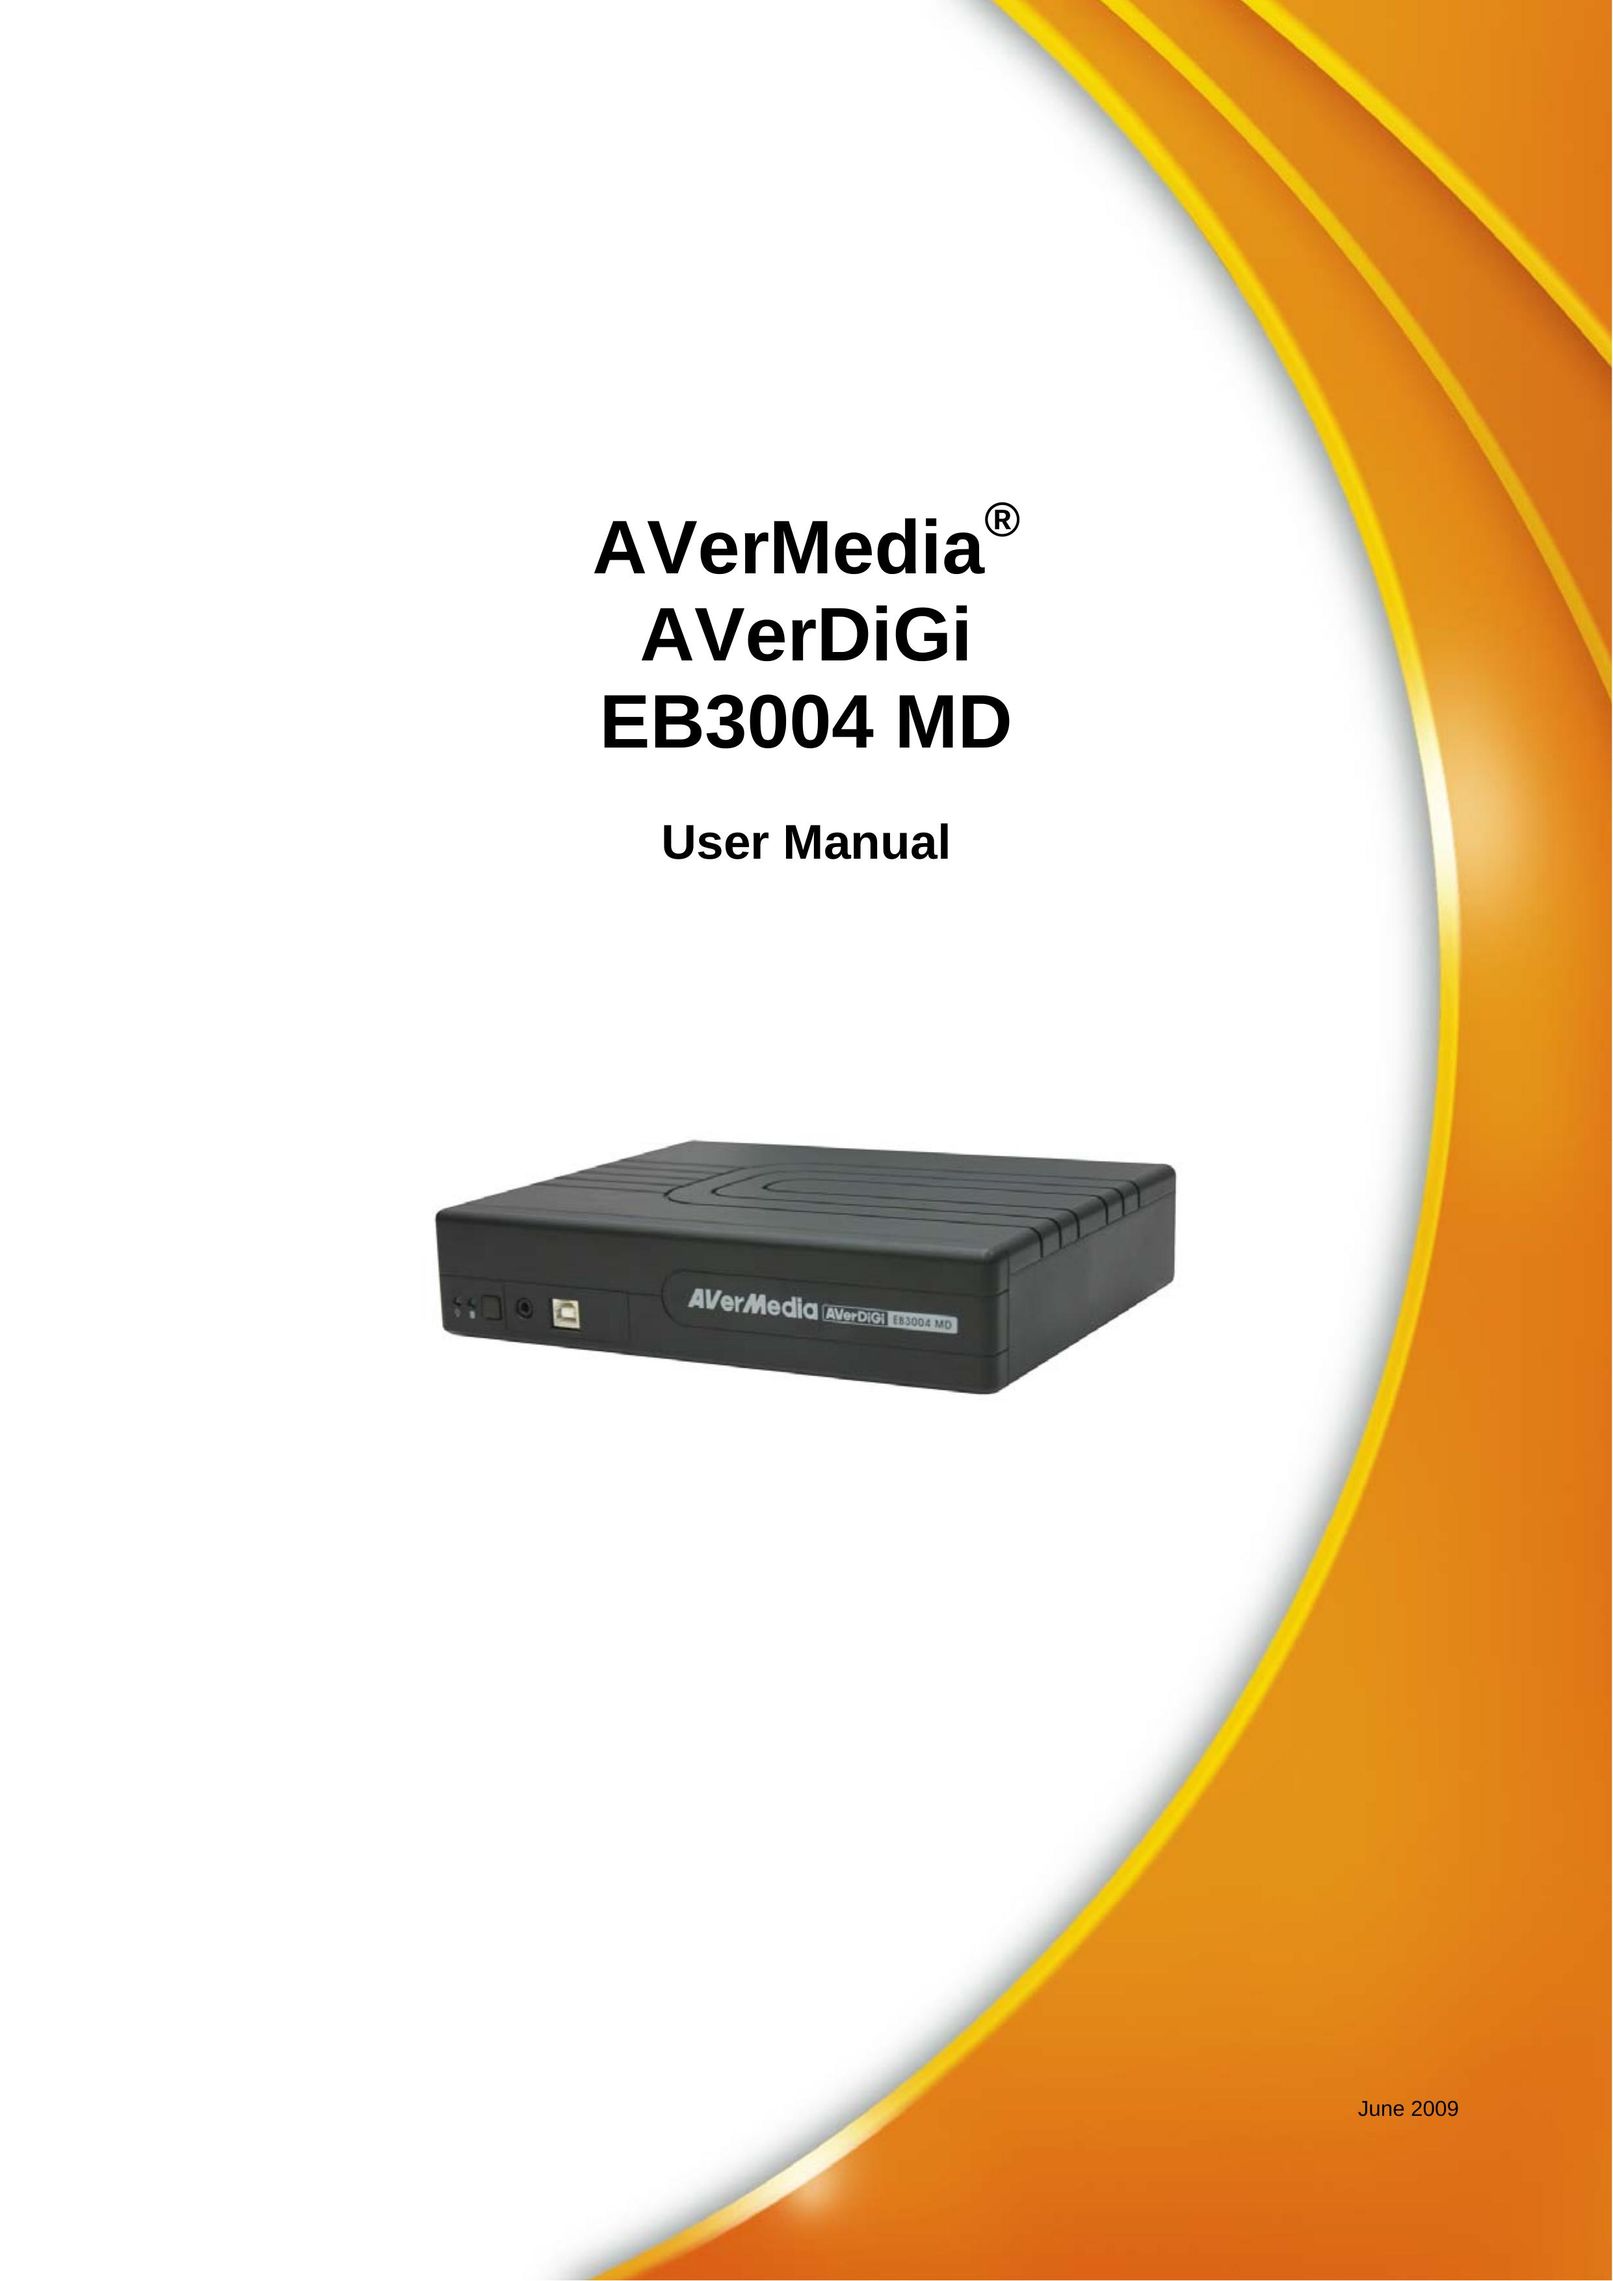 AVerMedia Technologies EB3004 MD DVR User Manual